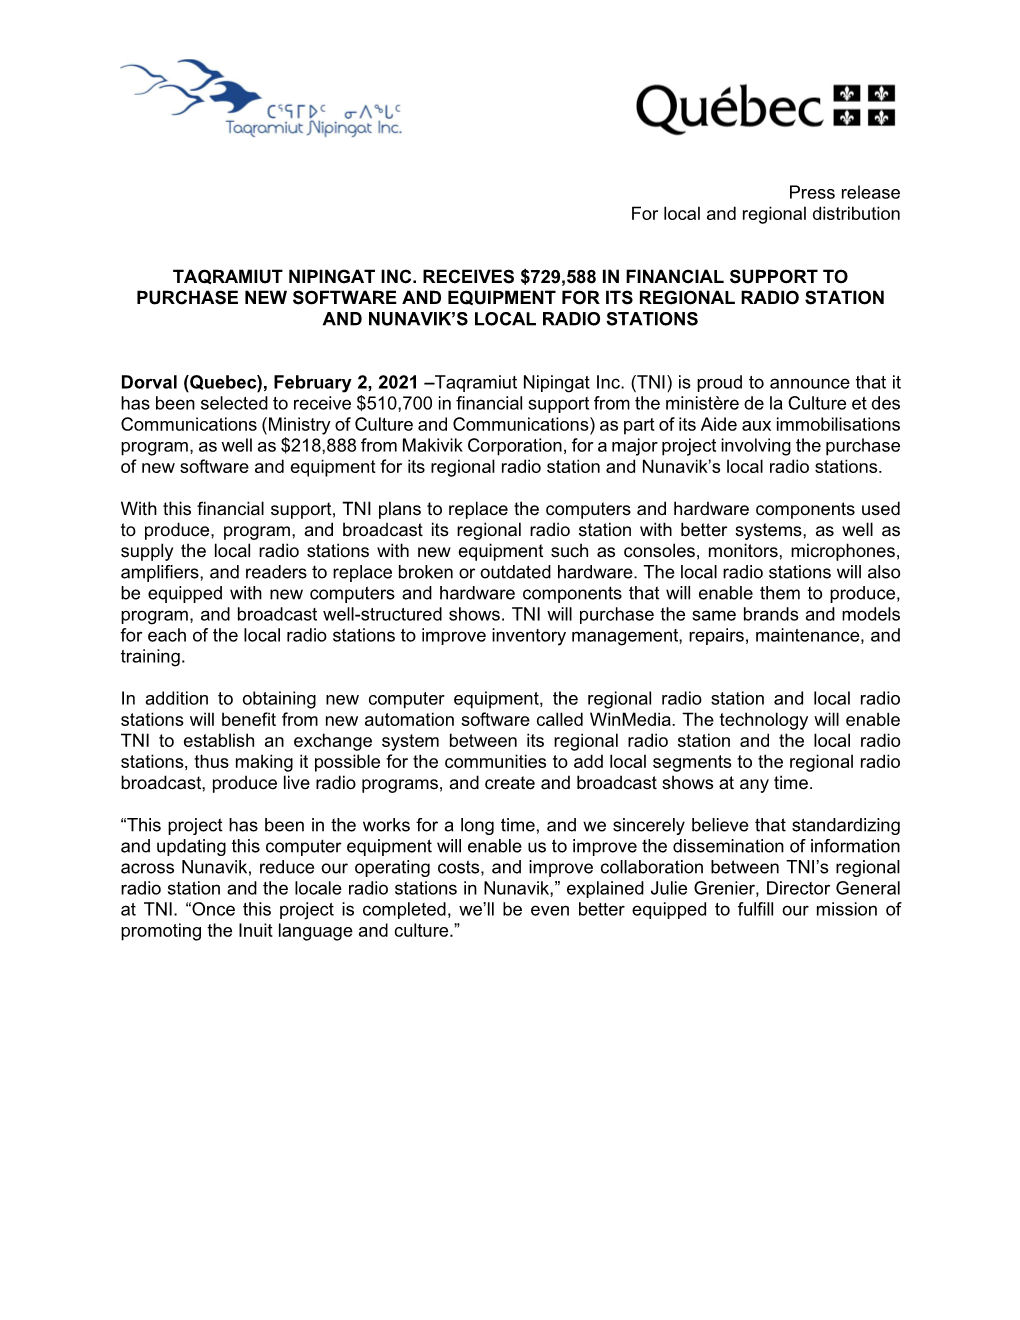 Press Release for Local and Regional Distribution TAQRAMIUT NIPINGAT